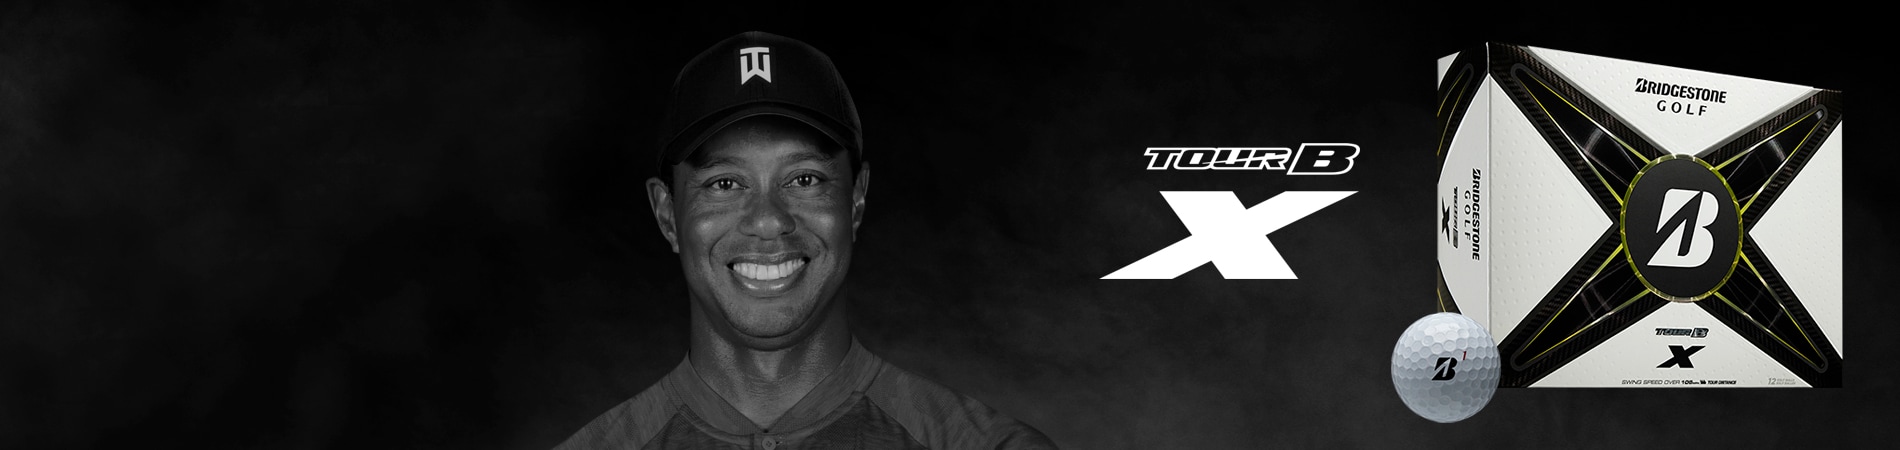 Bridgestone Golf Tour Team Tiger Woods